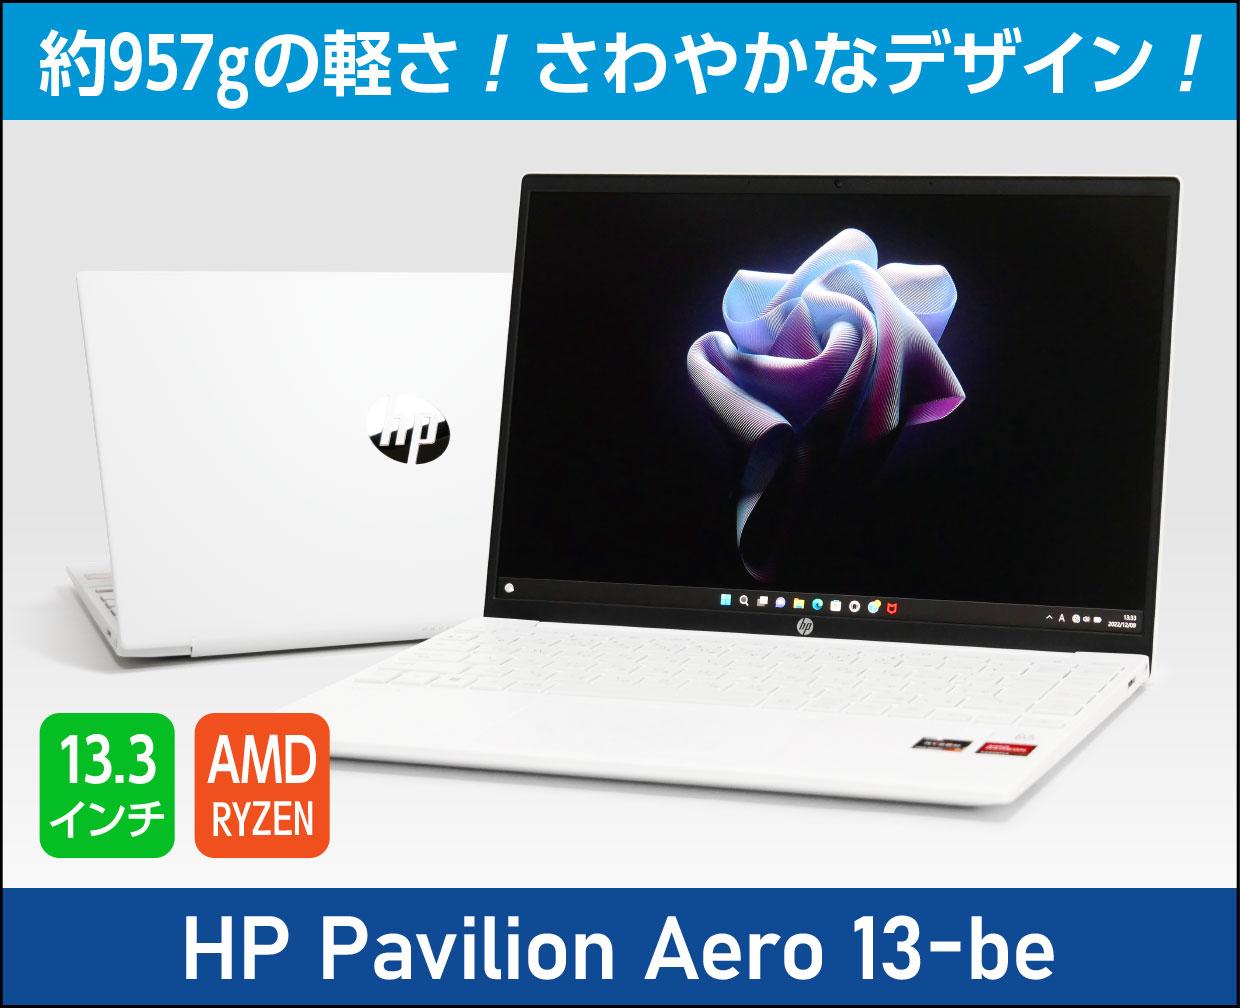 HP Pavilion Aero 13 パフォーマンス